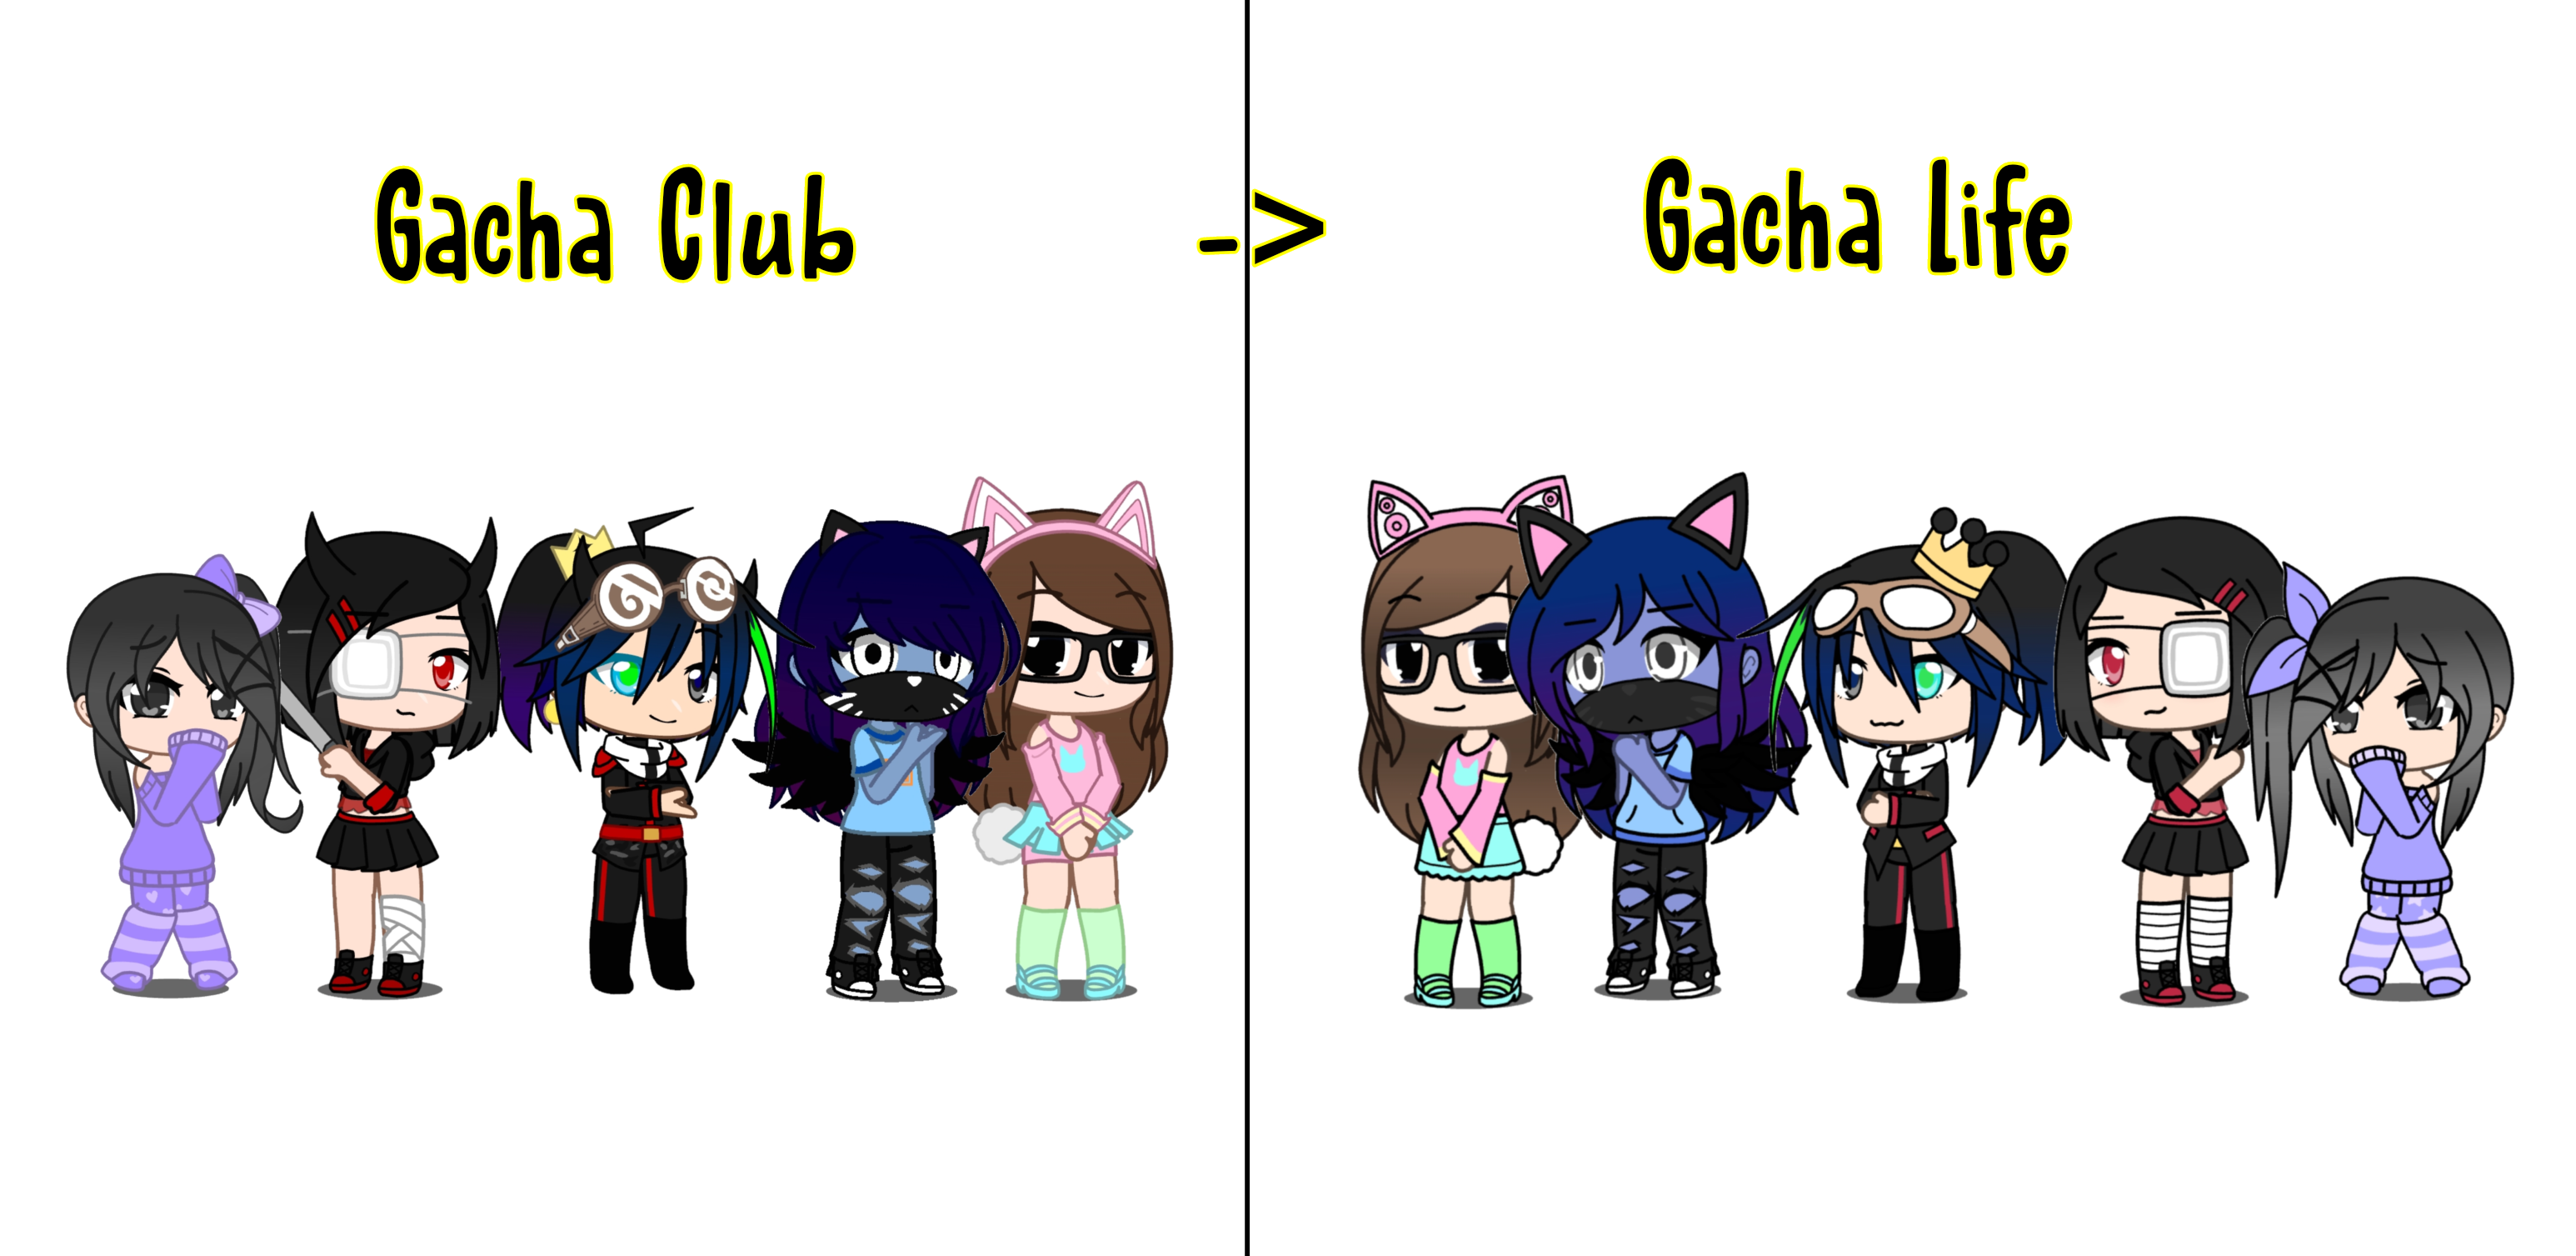 My ocs in Gacha Club and Gacha Life by HanakoLovesEddsworld on DeviantArt